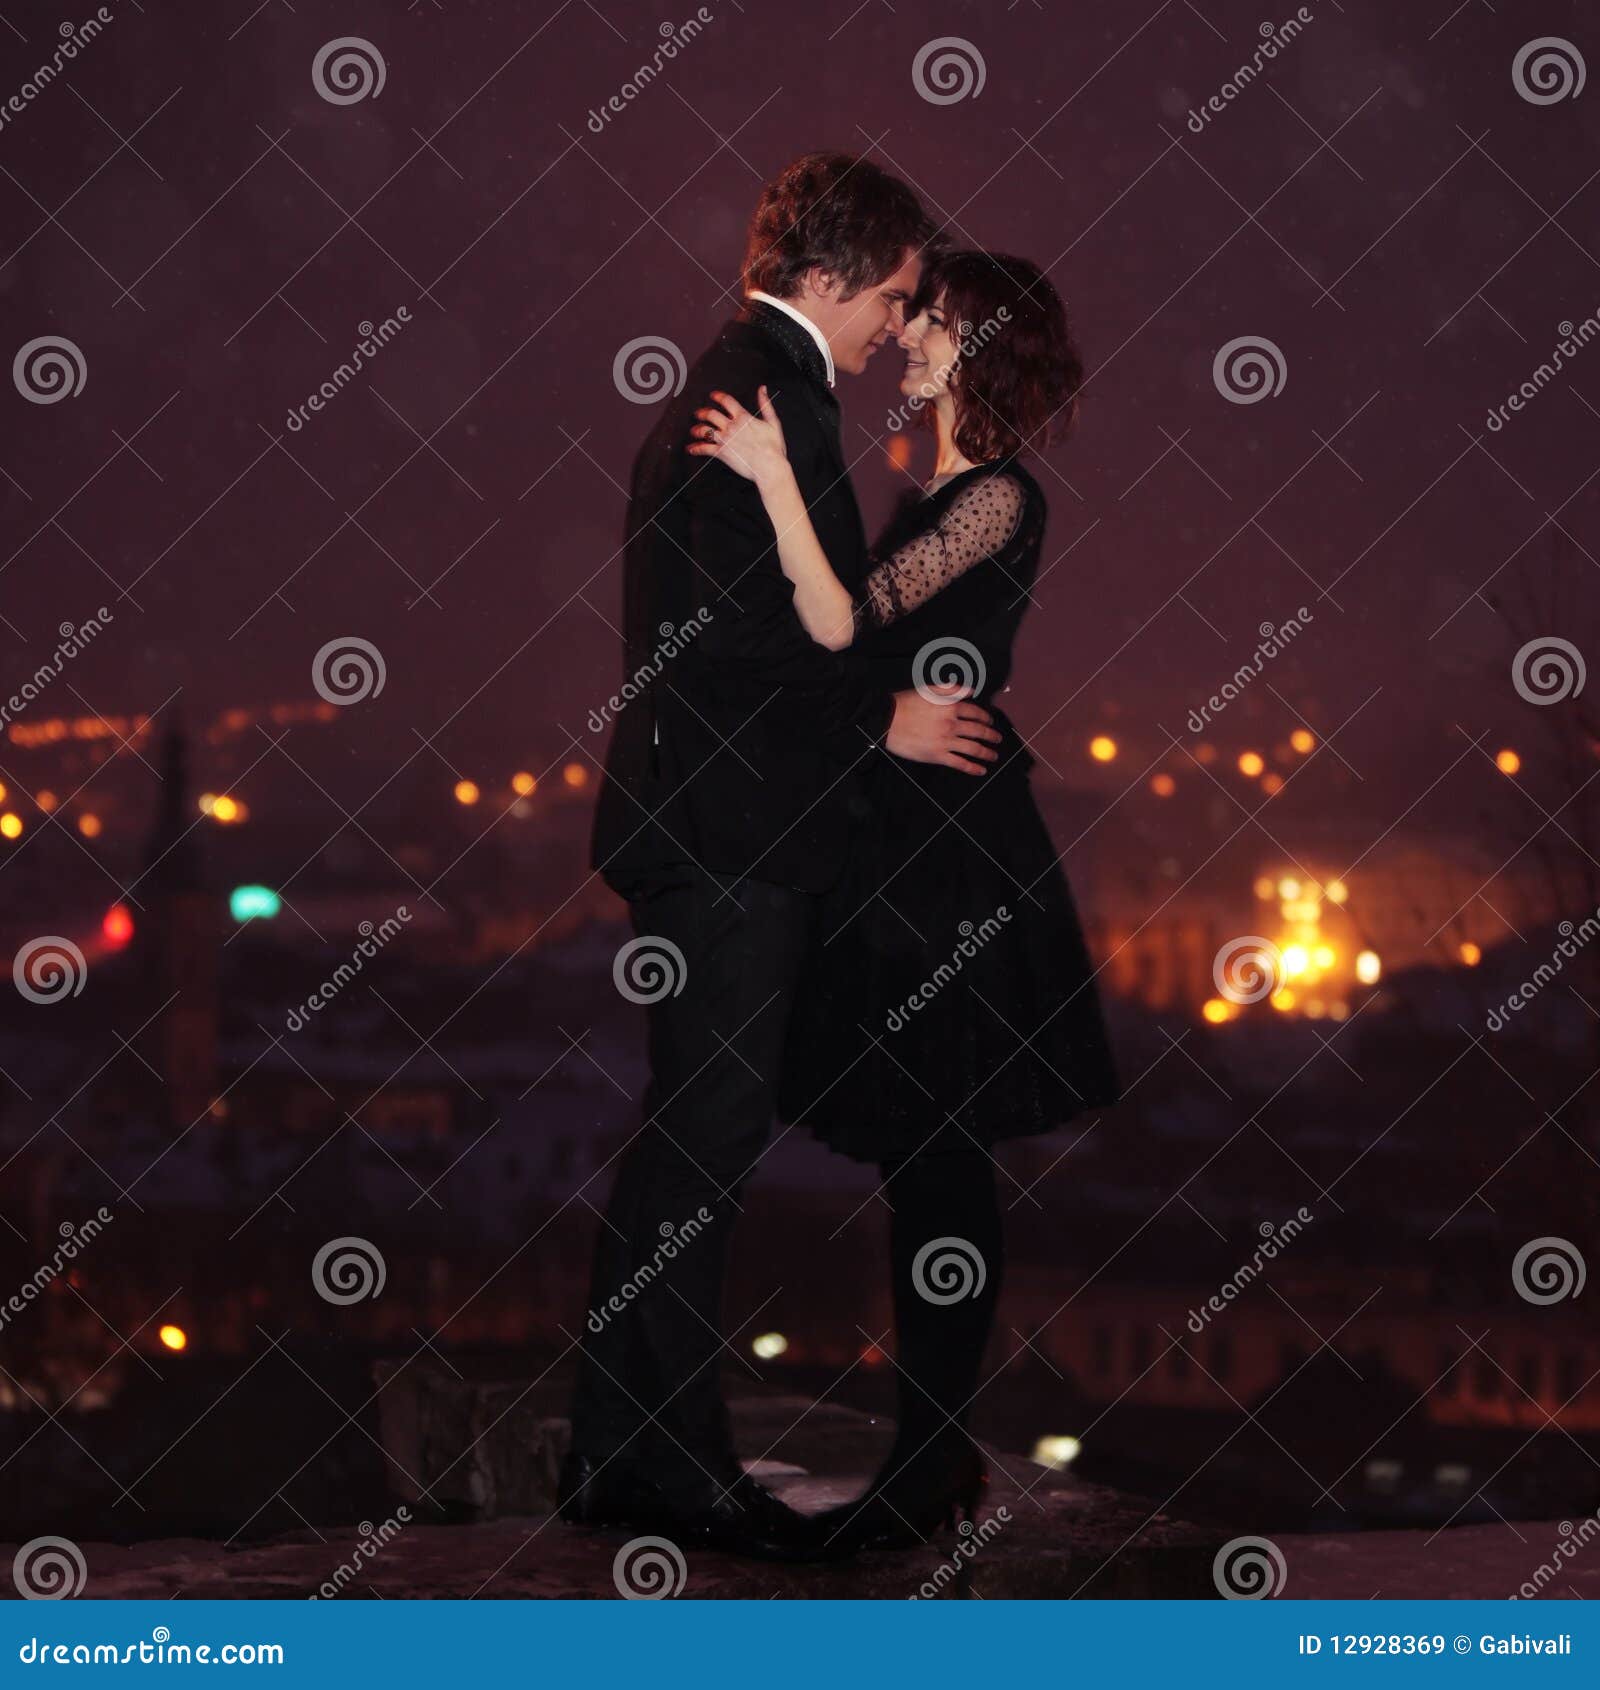 Love Couple On Valentine S Night Stock Image Image Of Jacket Houses 12928369